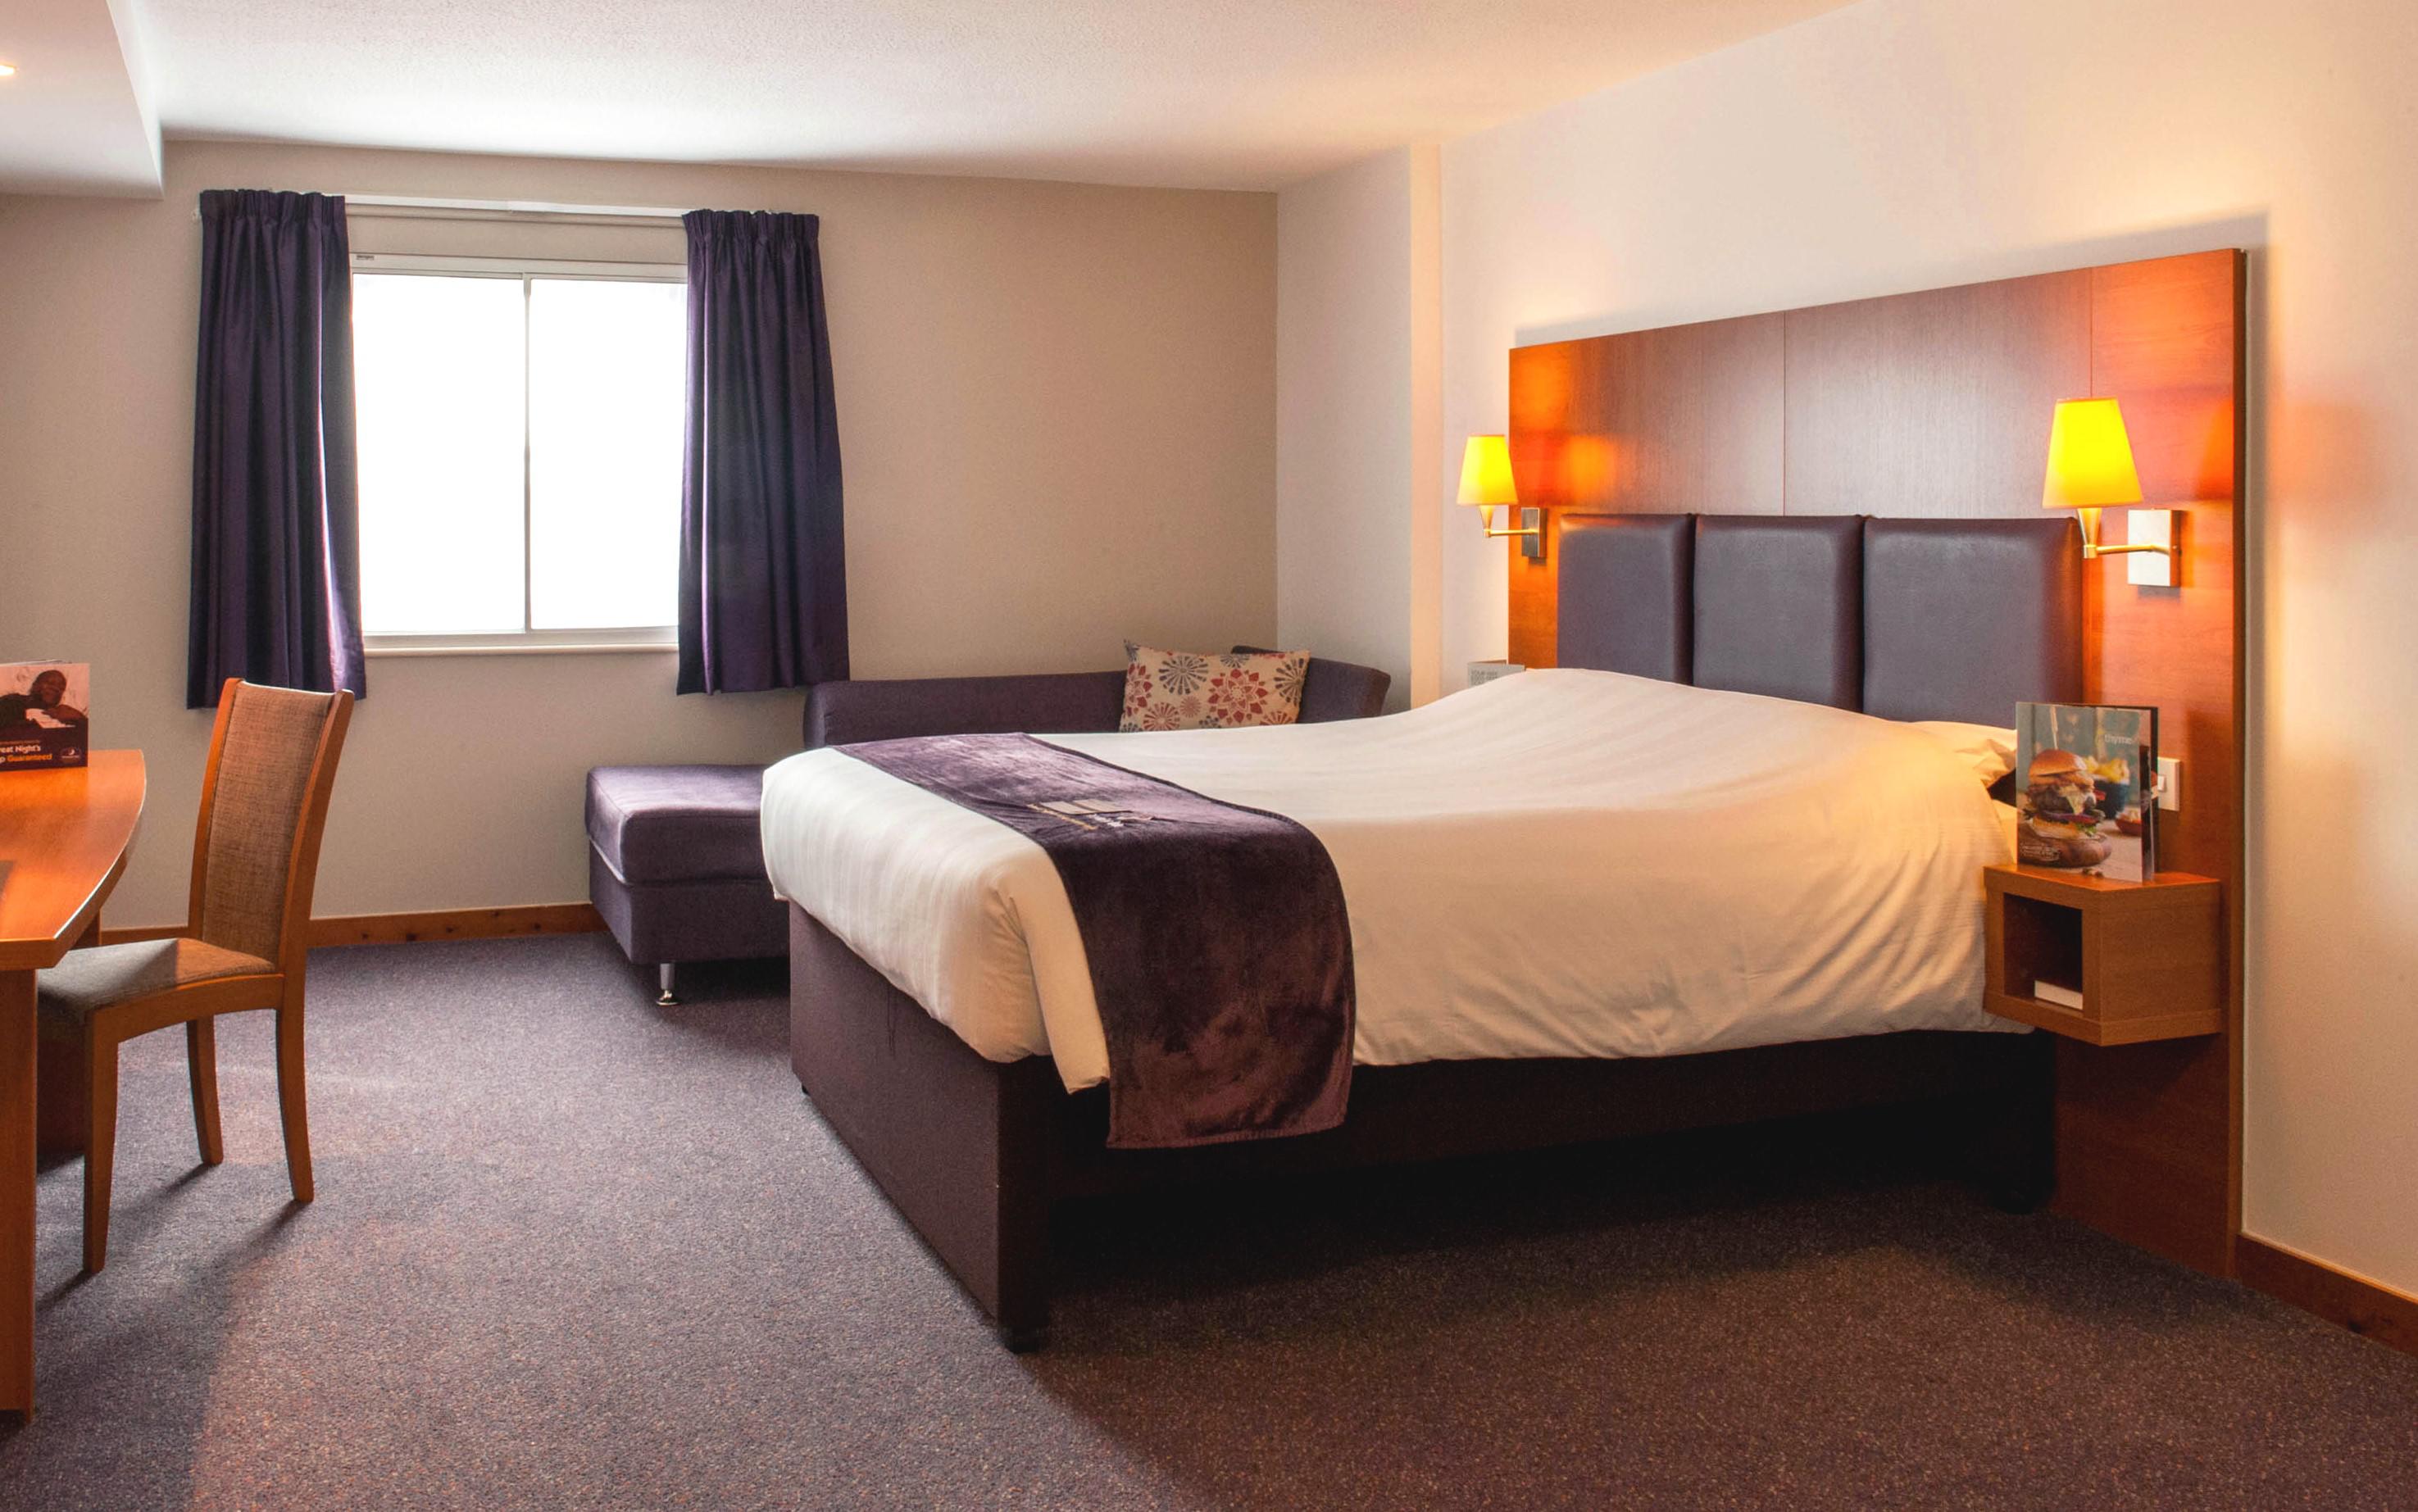 Premier Inn bedroom Premier Inn Ayr/Prestwick Airport hotel Ayr 03337 773674